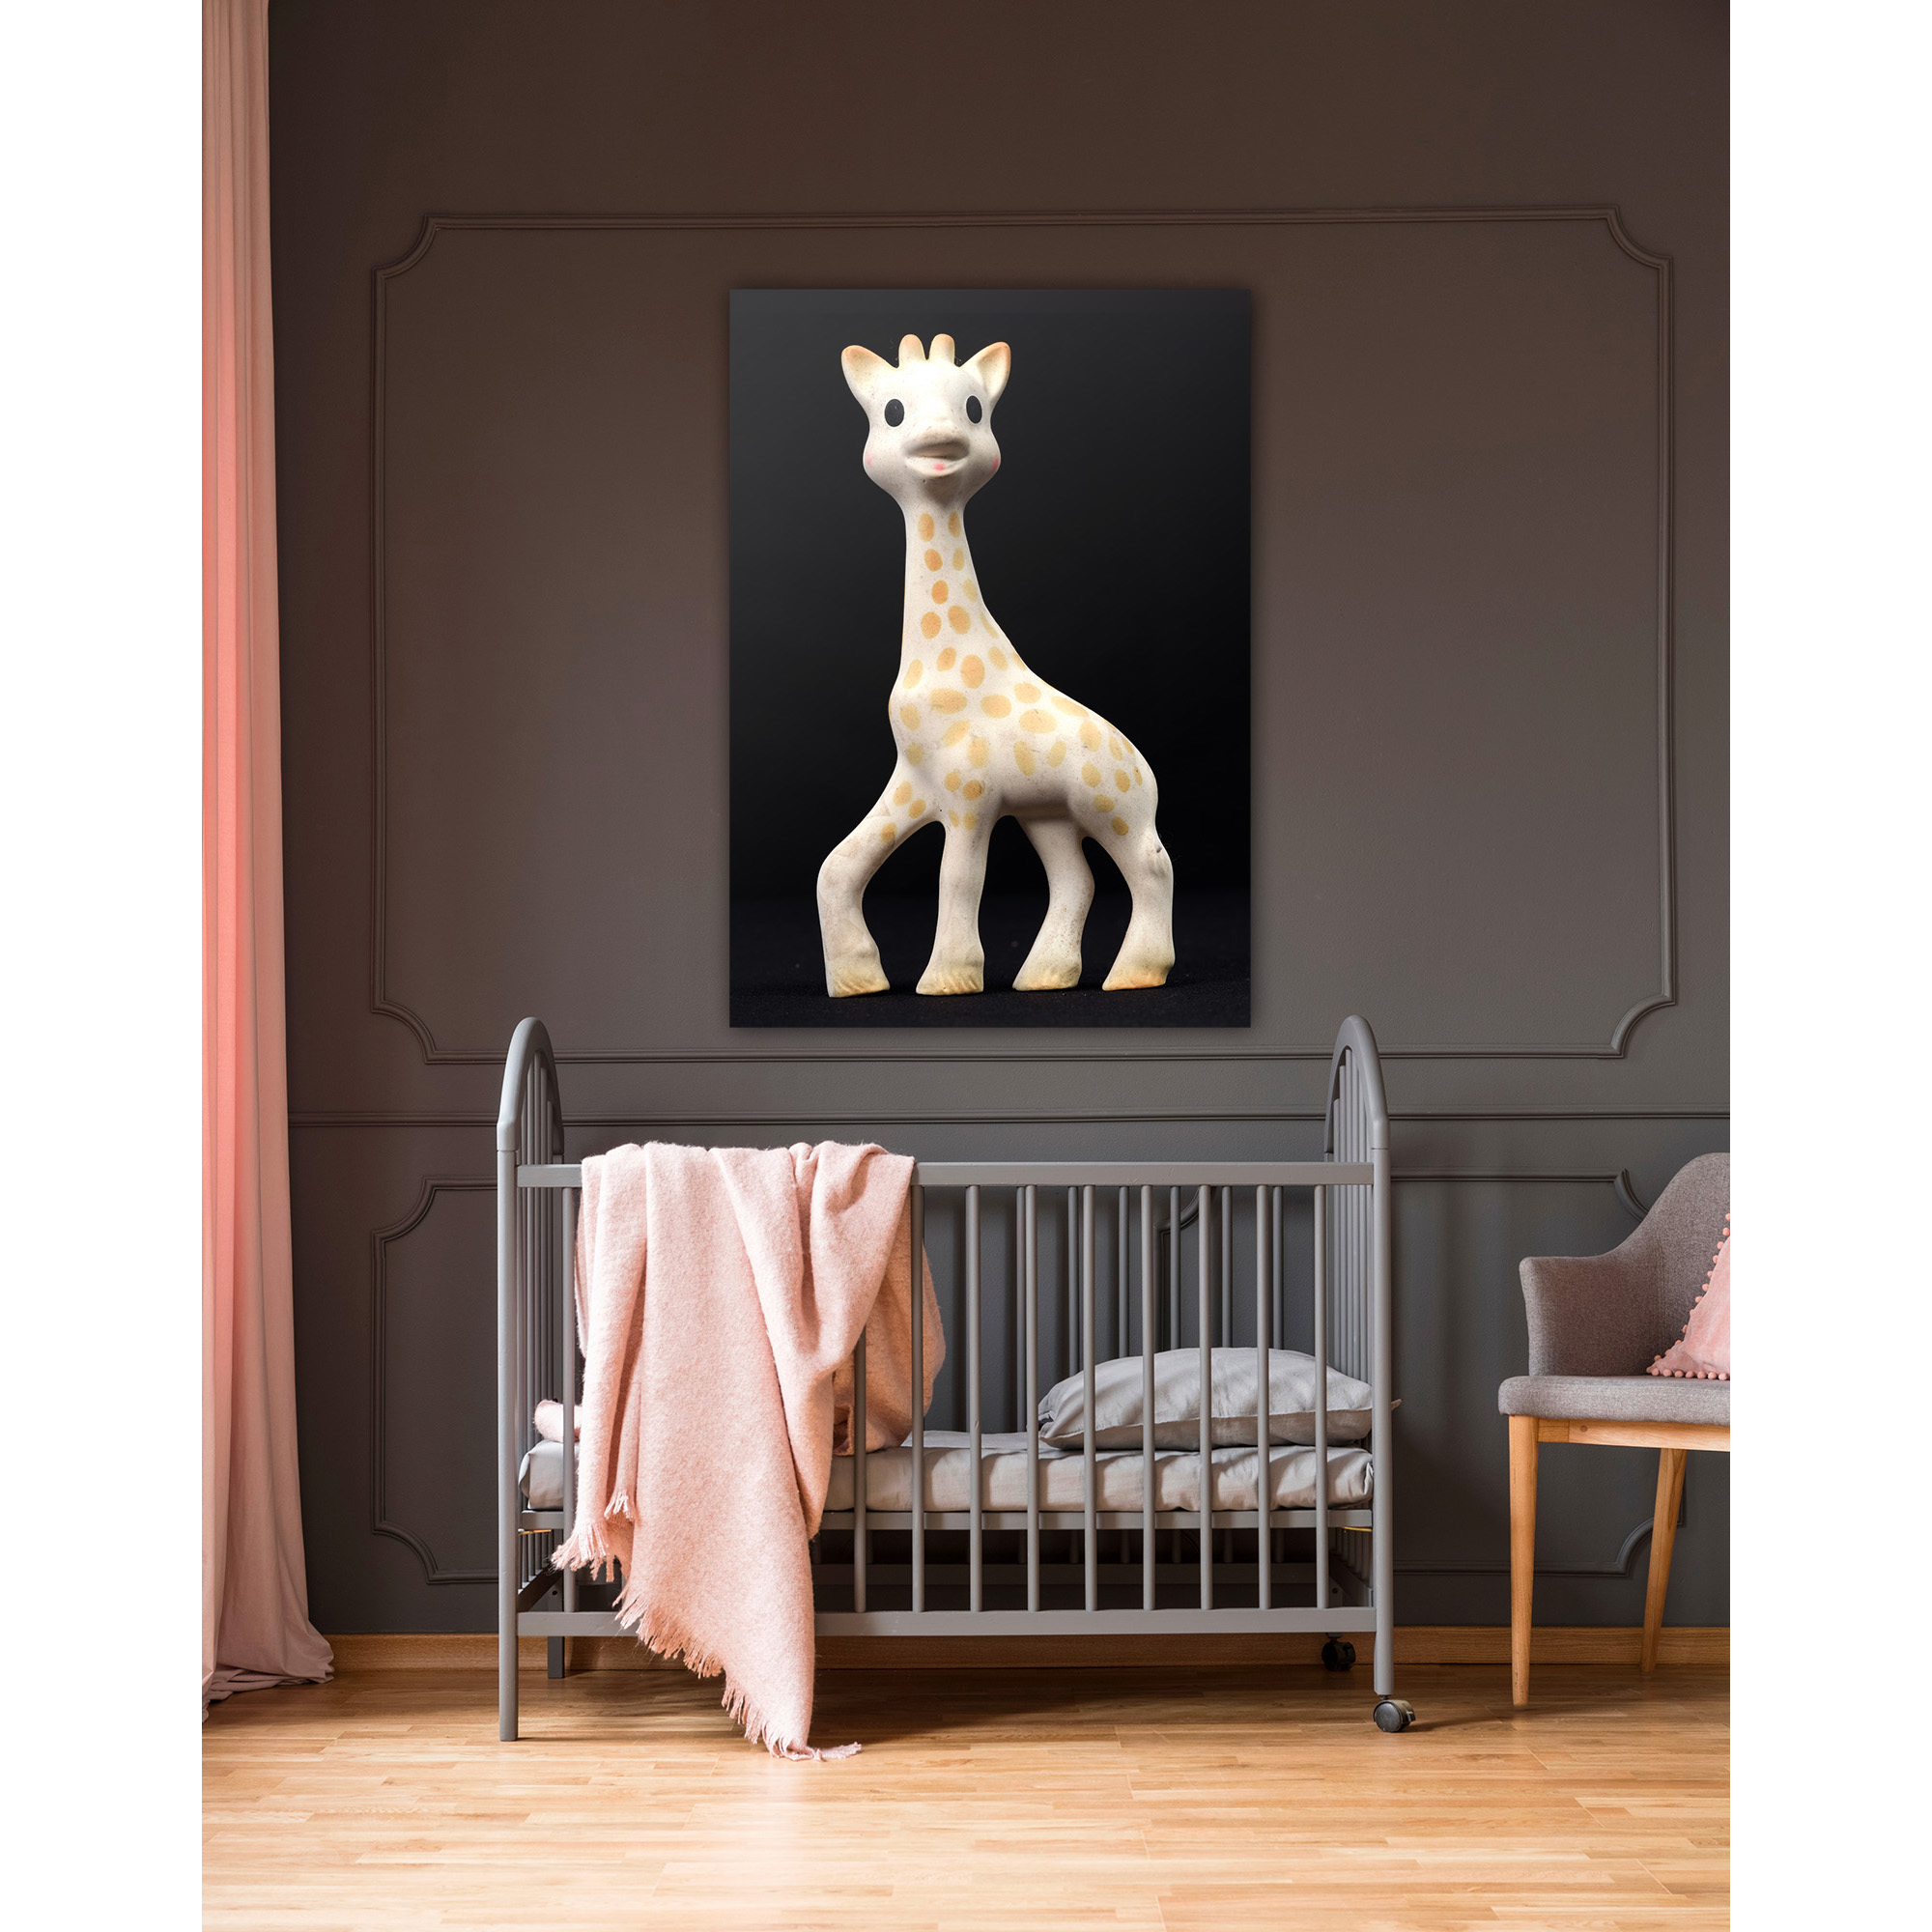 L'imagier de sophie la girafe